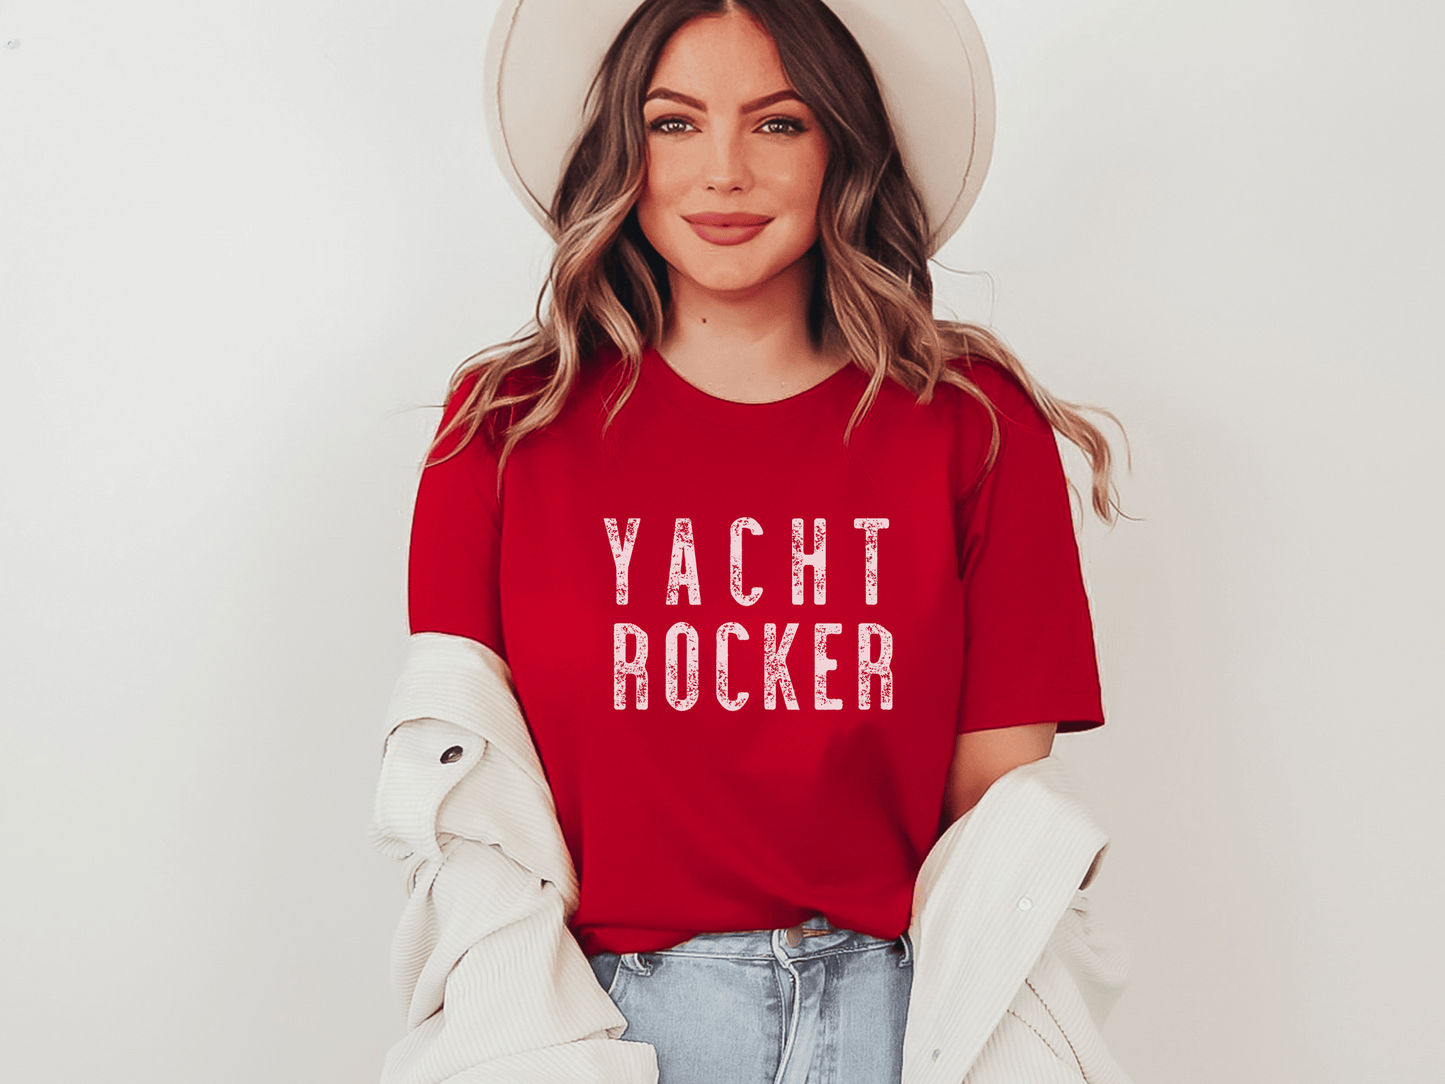 Yacht Rocker T-Shirt in Red